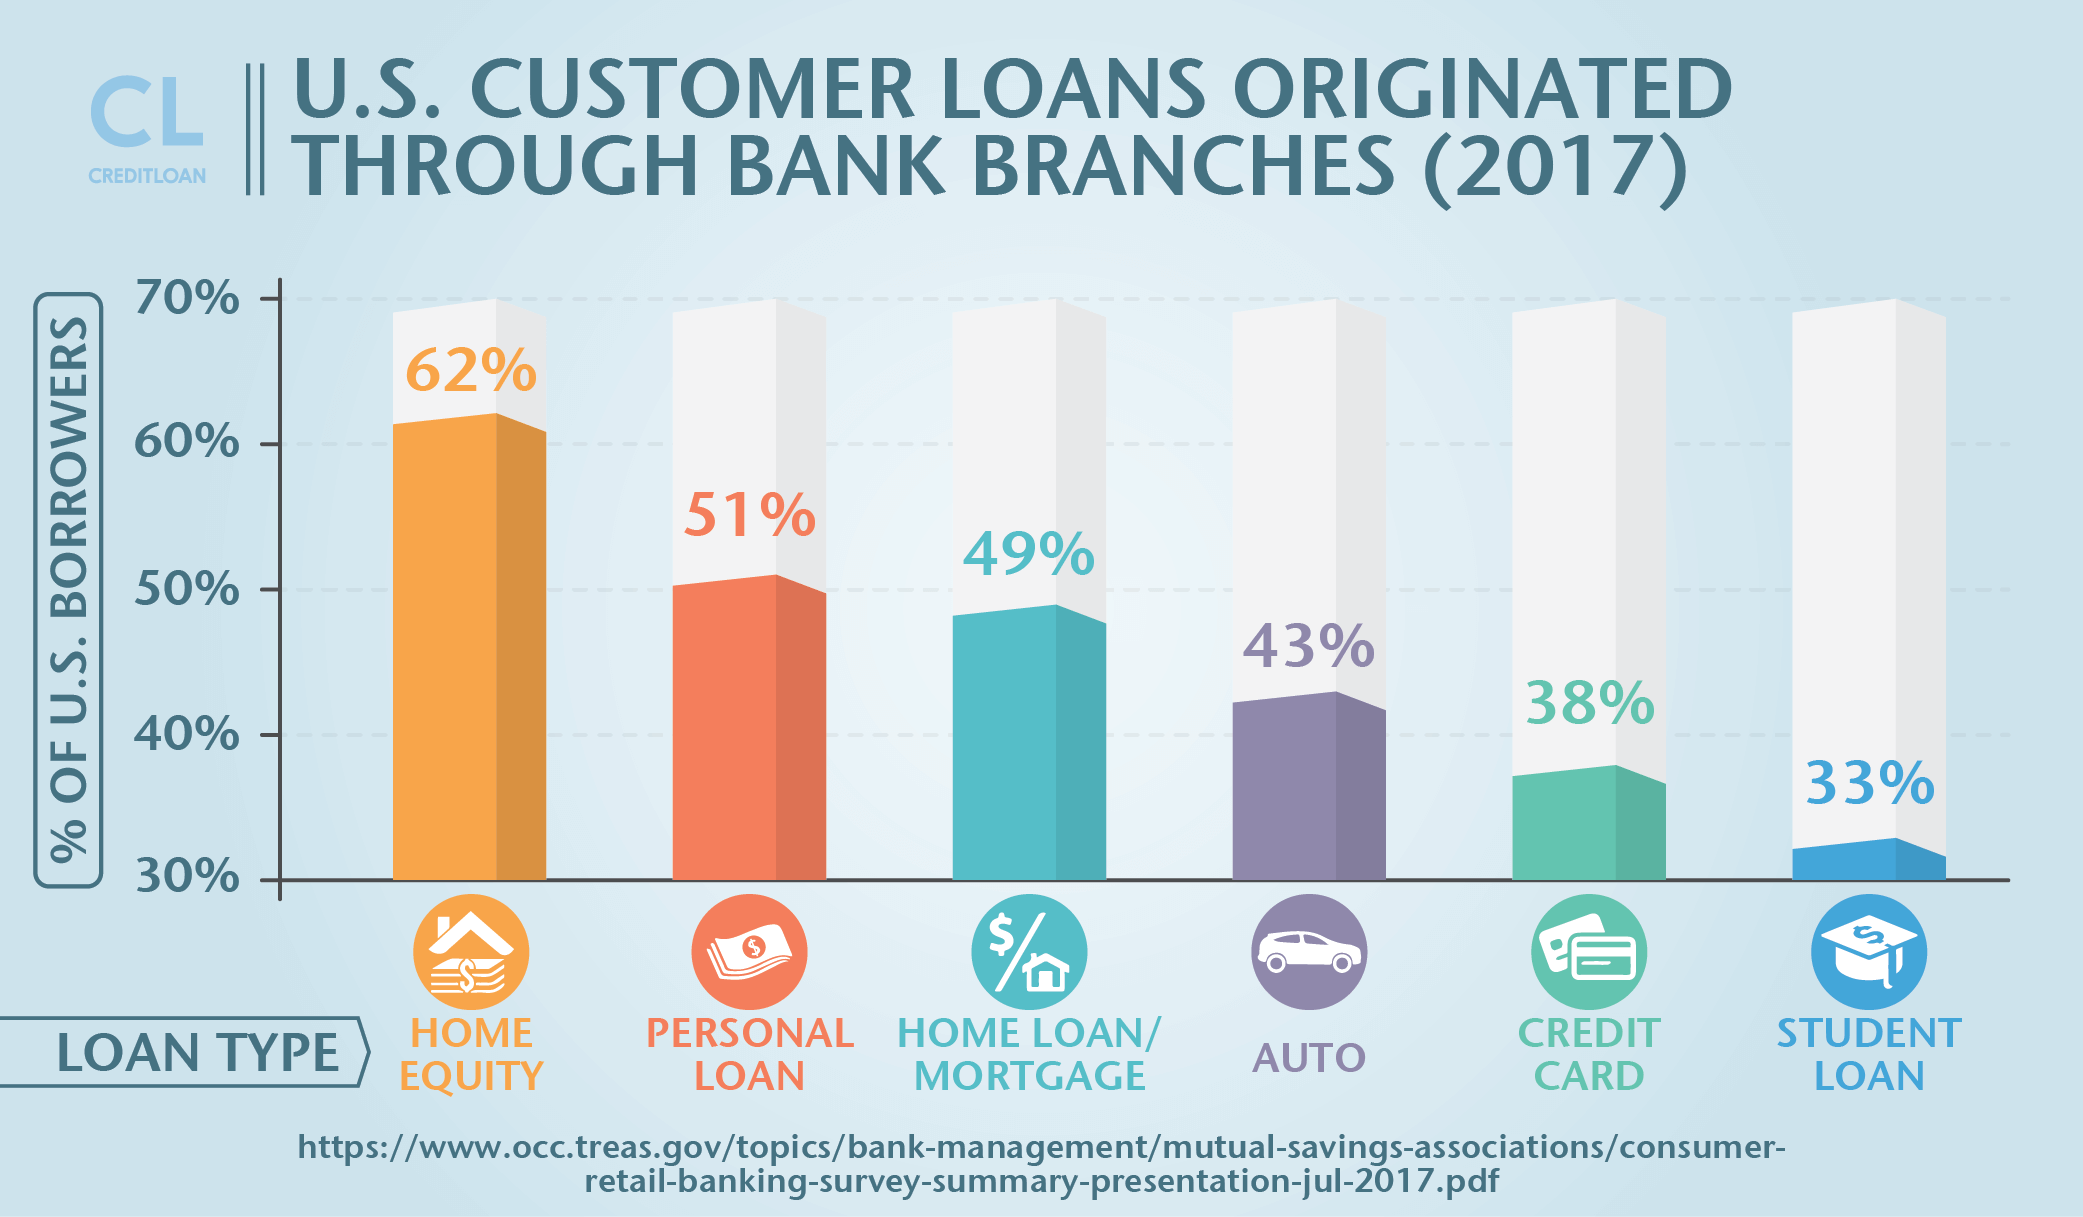 U.S. Customer Loans Originated Through Bank Branches